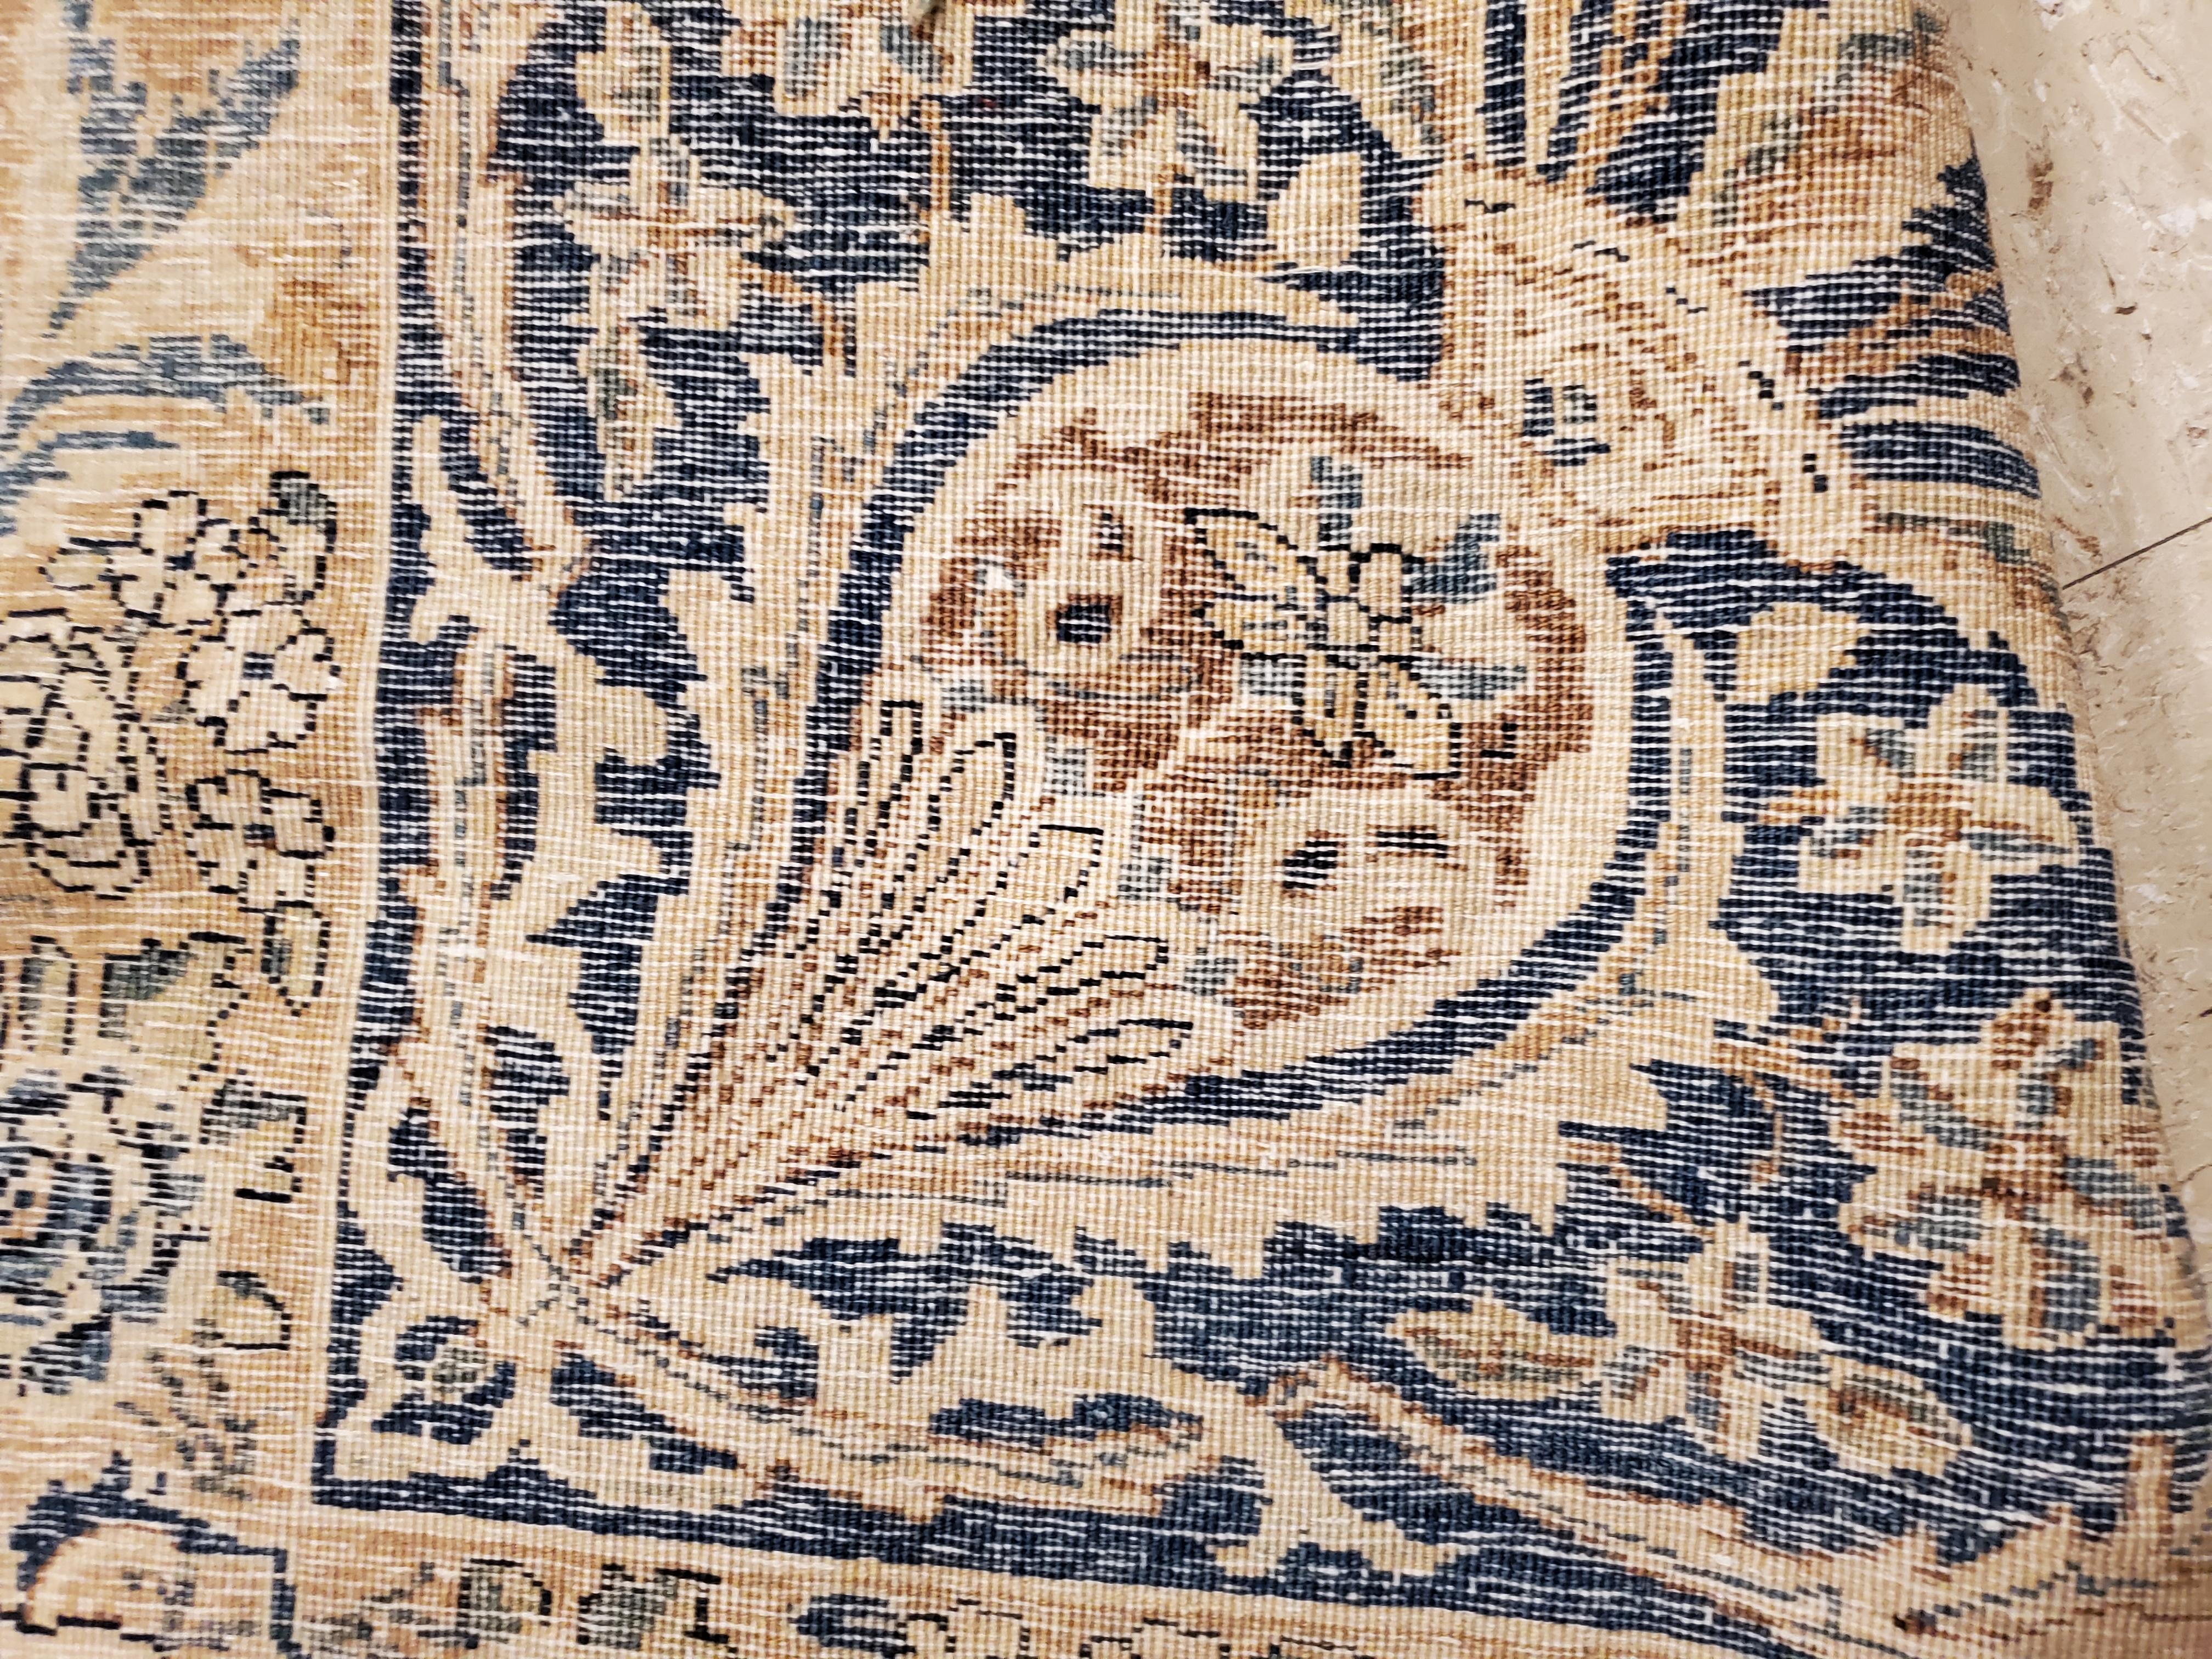 Antique Persian Lavar Kerman Carpet, Handmade Rug, Brown, Taupe, Light Blue Navy 2